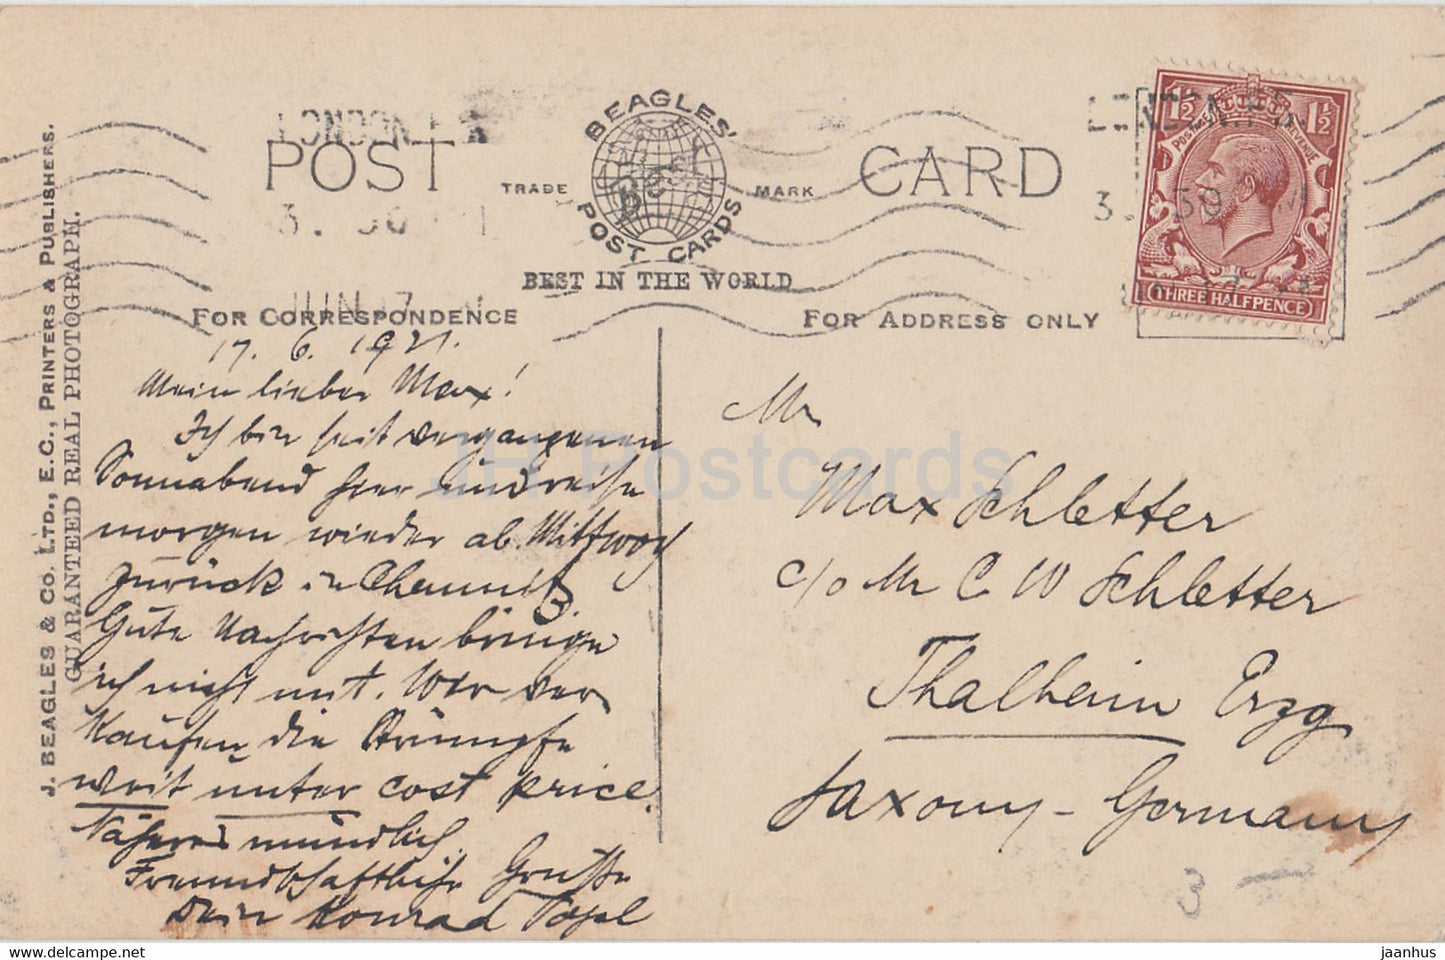 London – Trafalgar Square &amp; National Gallery – Beagles – alte Postkarte – England – Vereinigtes Königreich – gebraucht